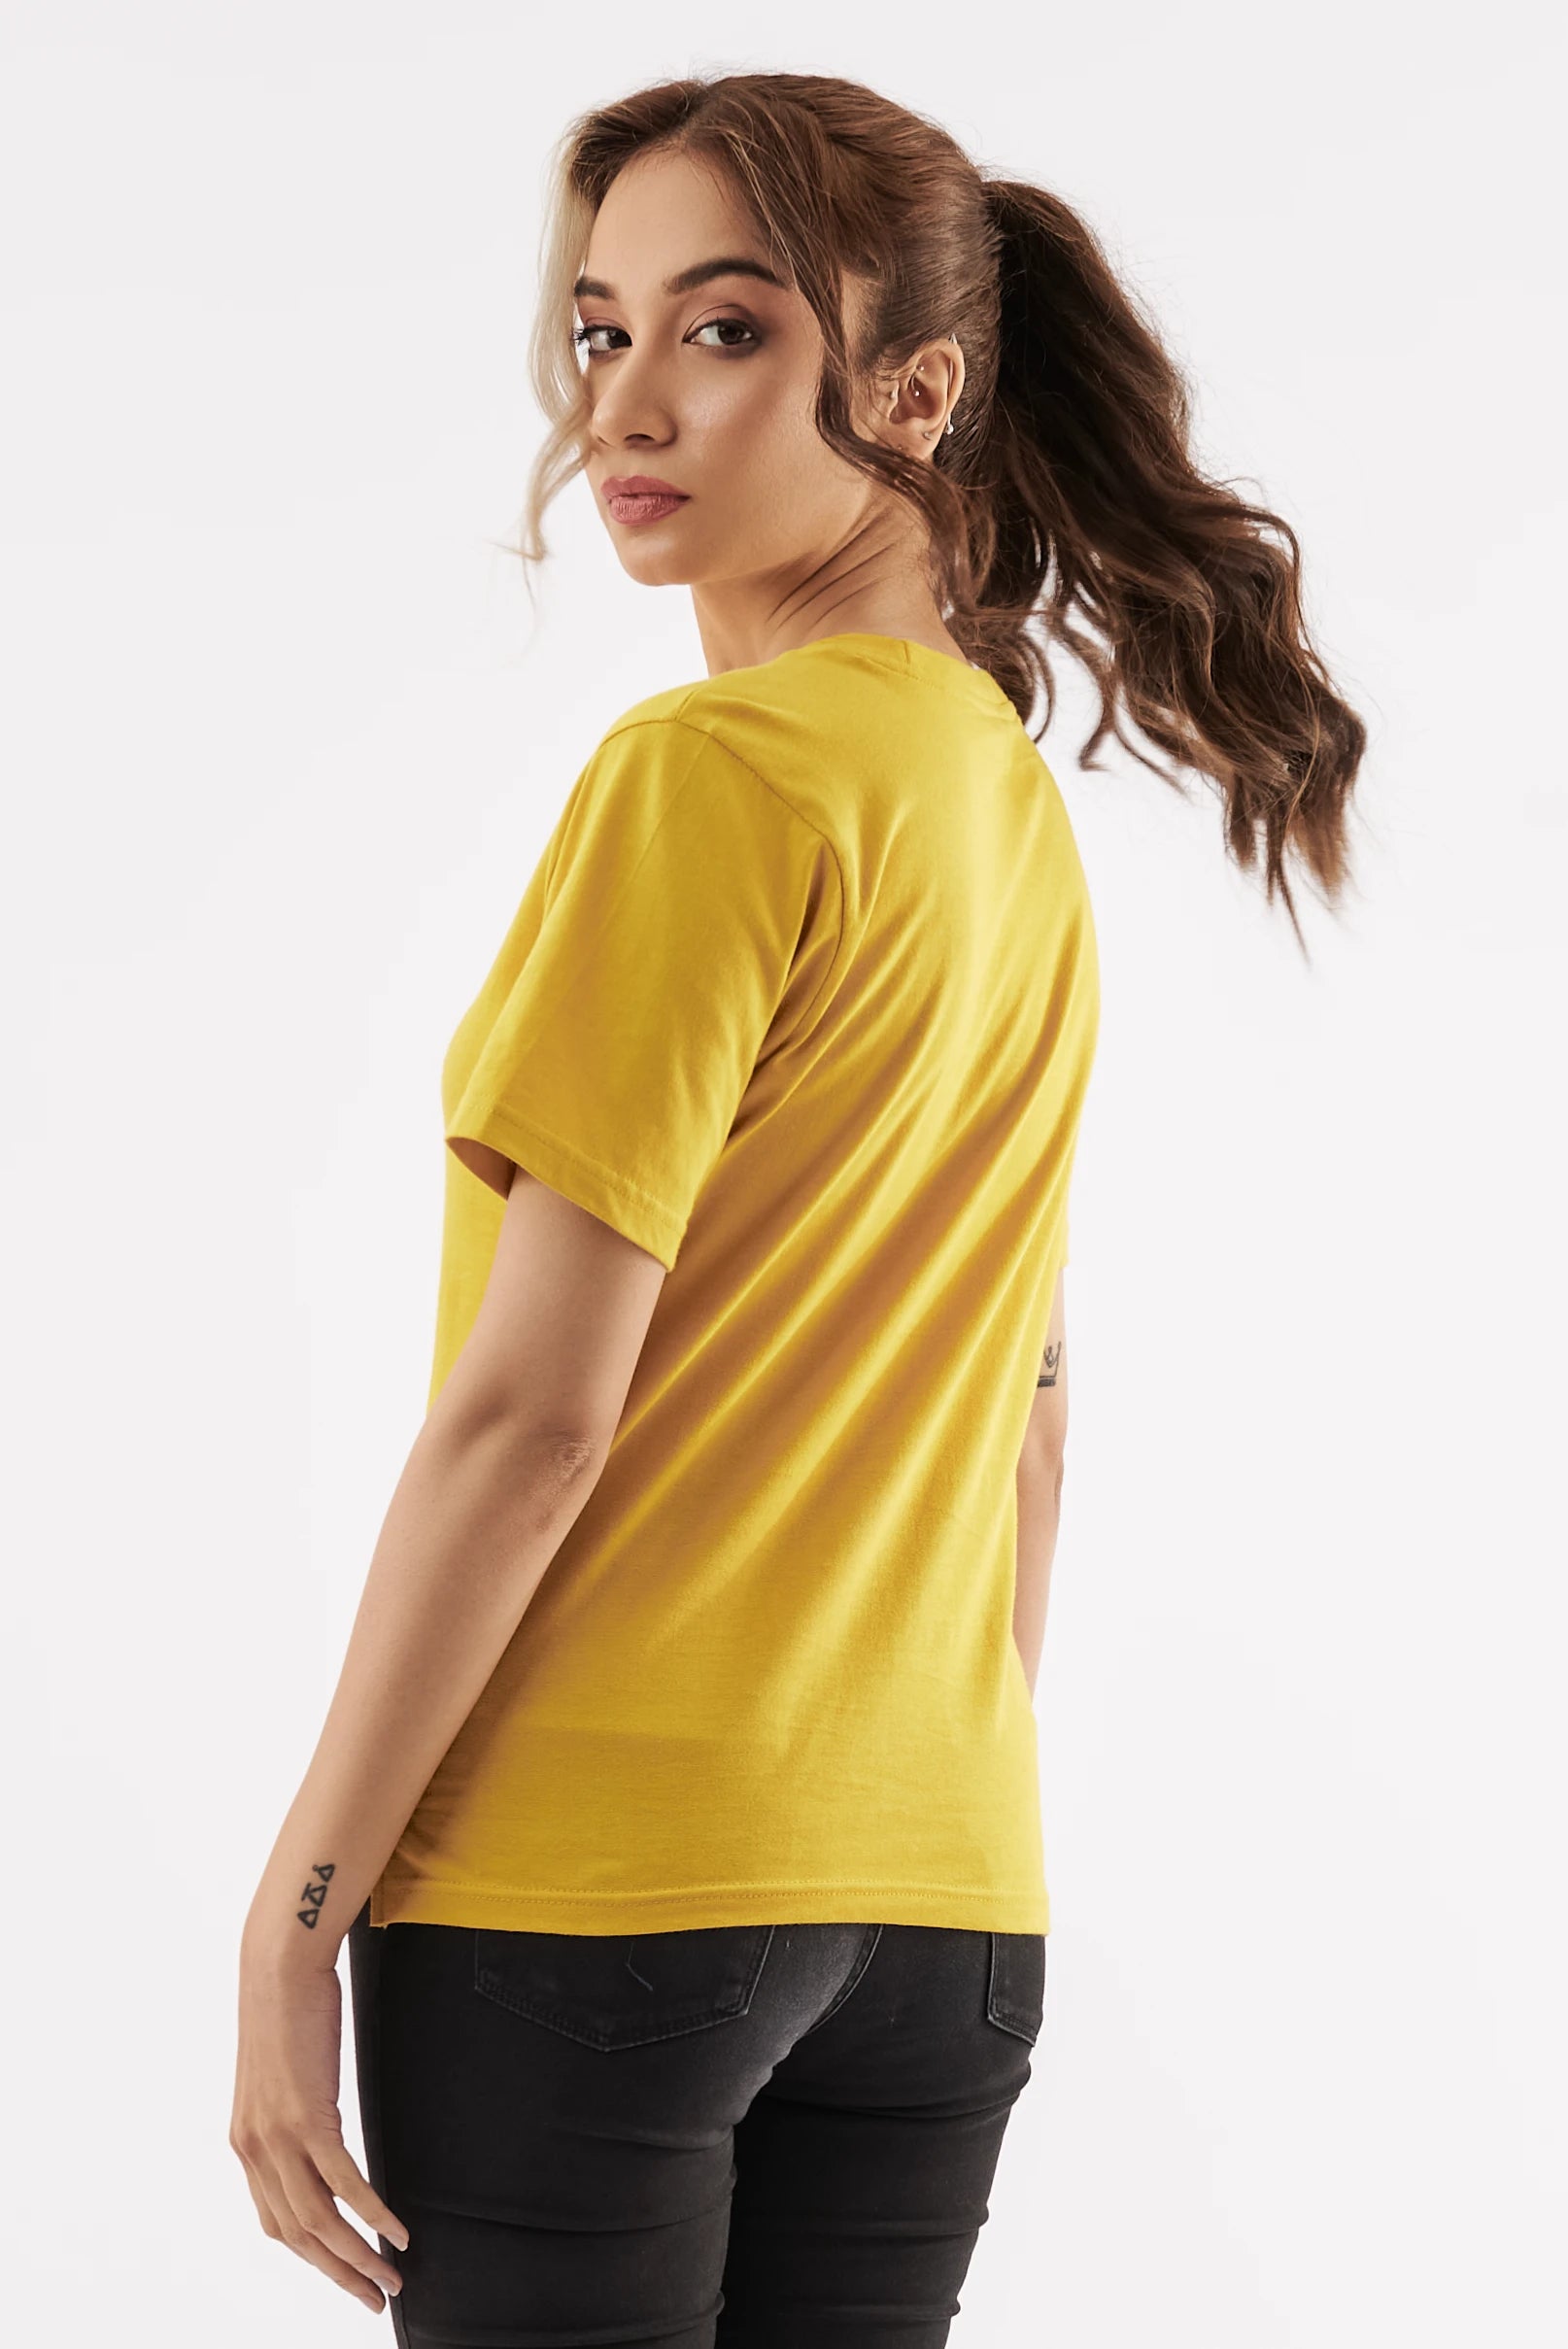 Women's Self-Compassion Graphic T-Shirt Mustard